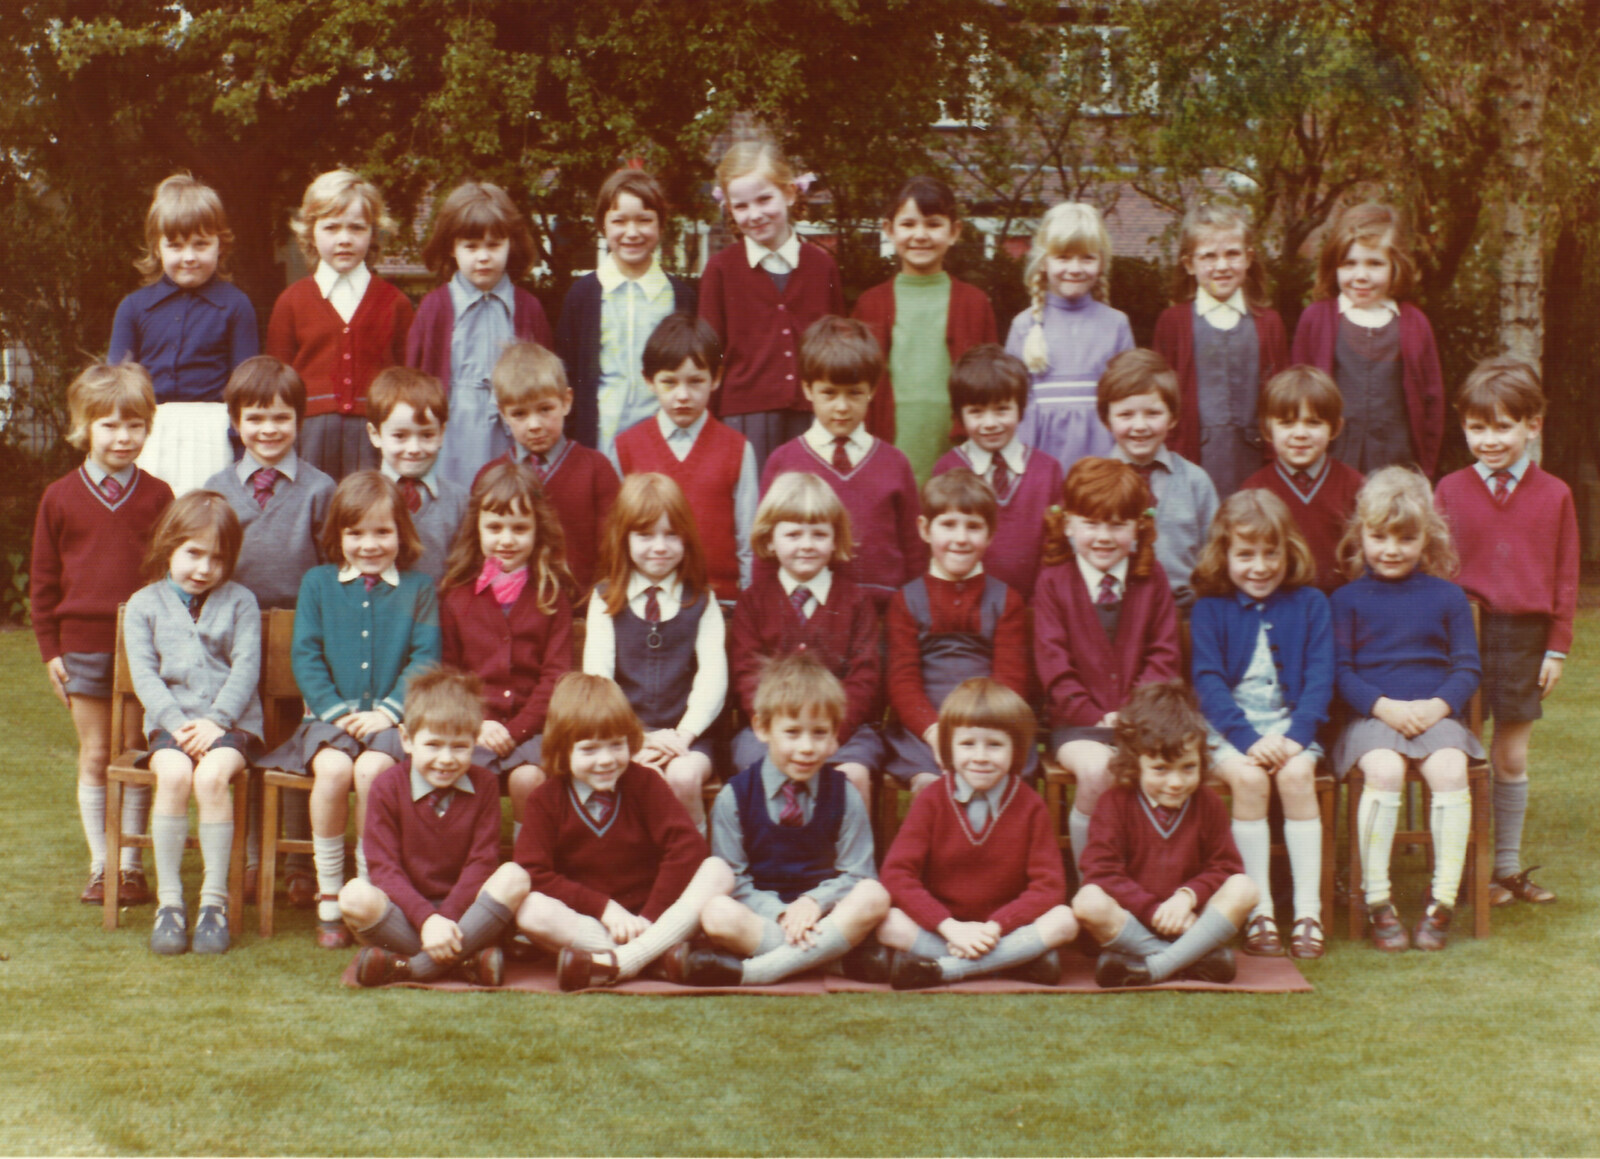 Family History: The 1970s, Timperley and Sandbach, Cheshire - 24th January 2020: Sis's school photo, Offley, Sandbach, 1975 or 76